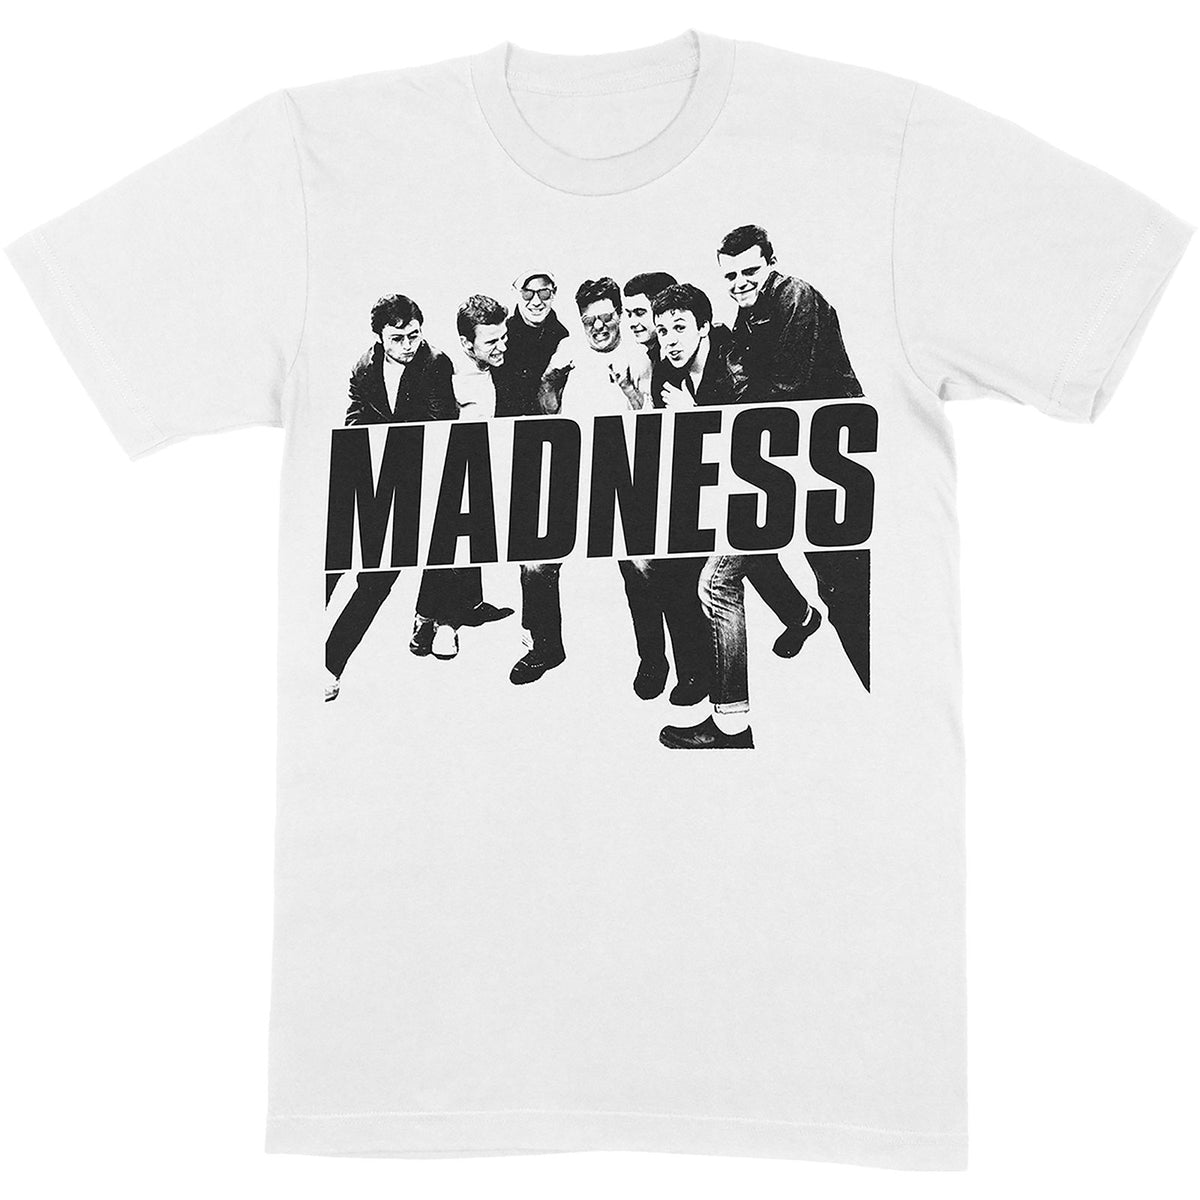 Madness Adult T-Shirt - Vintage Photo - Official Licensed Design